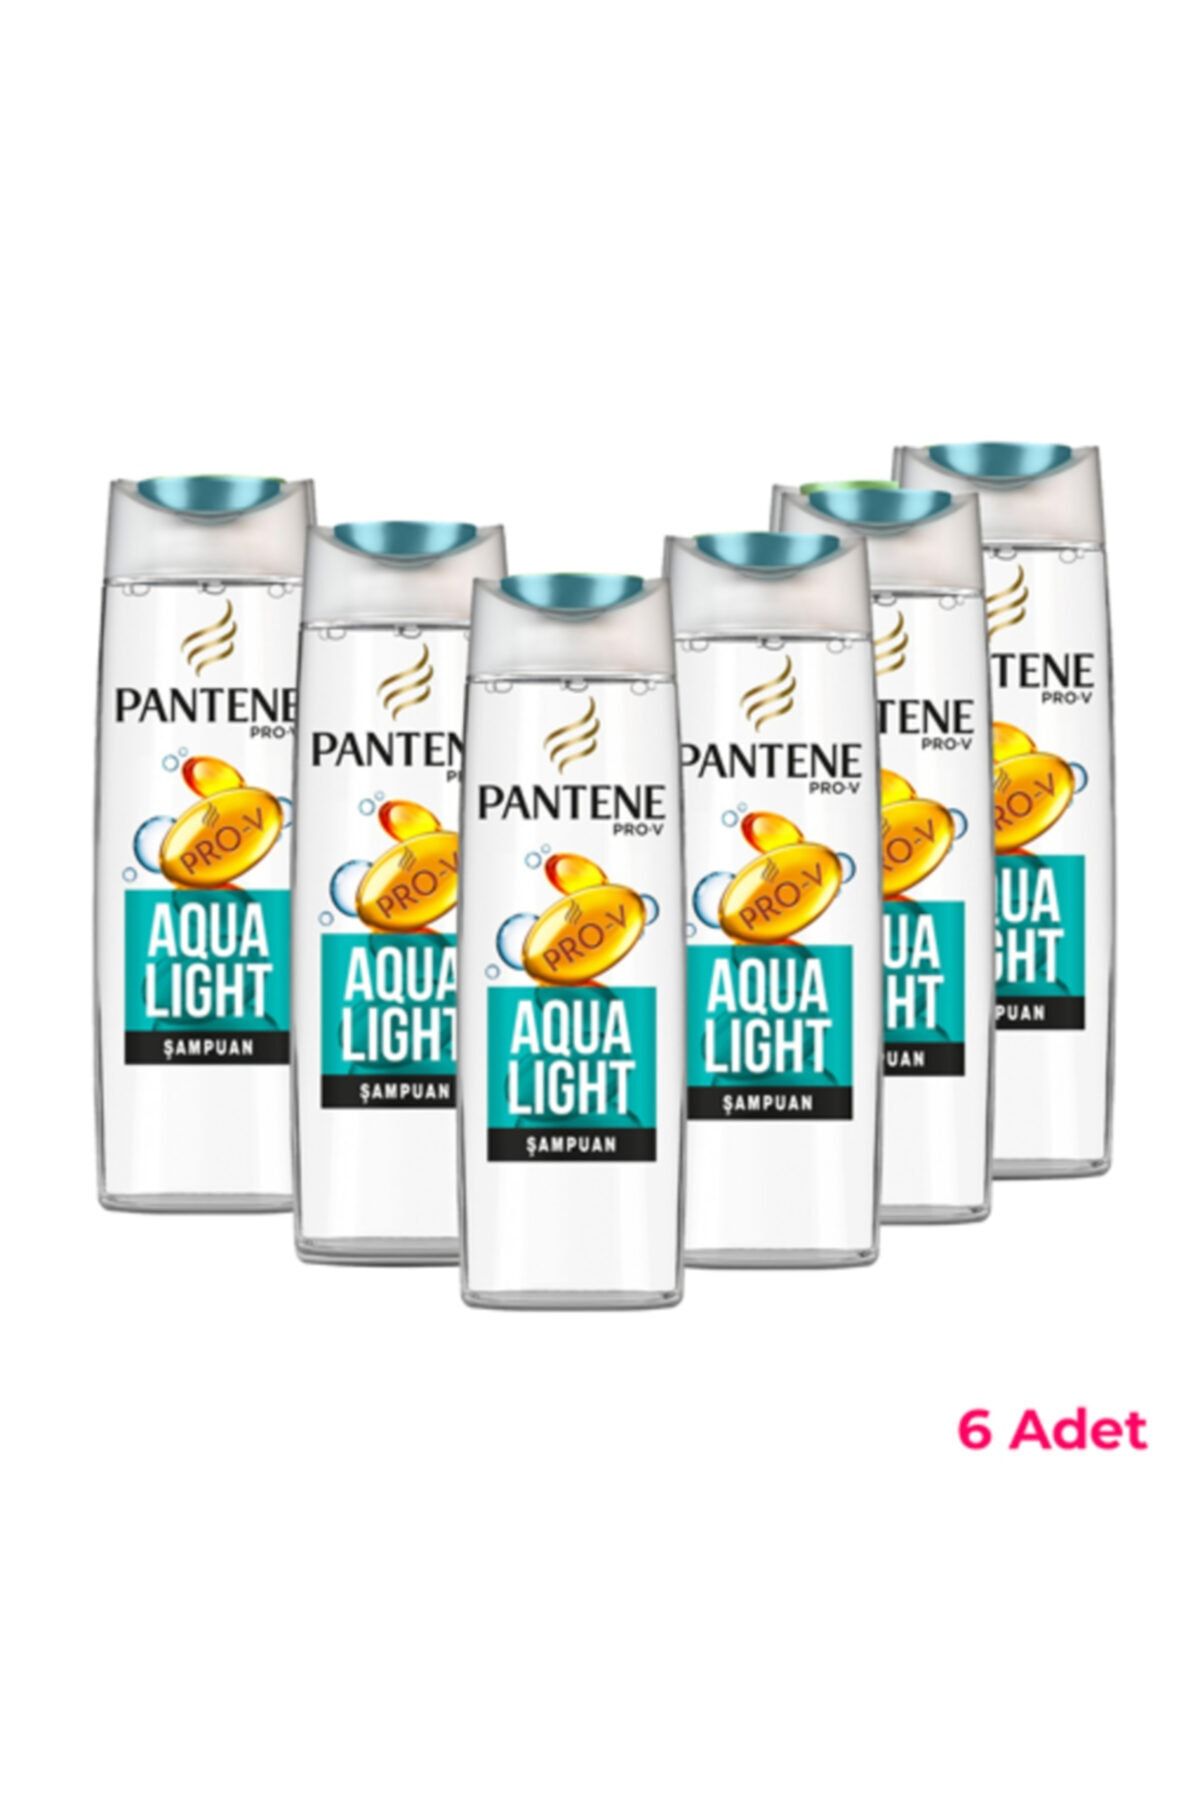 Pantene Şampuan Aqua Light 500 ml X 6 Adet